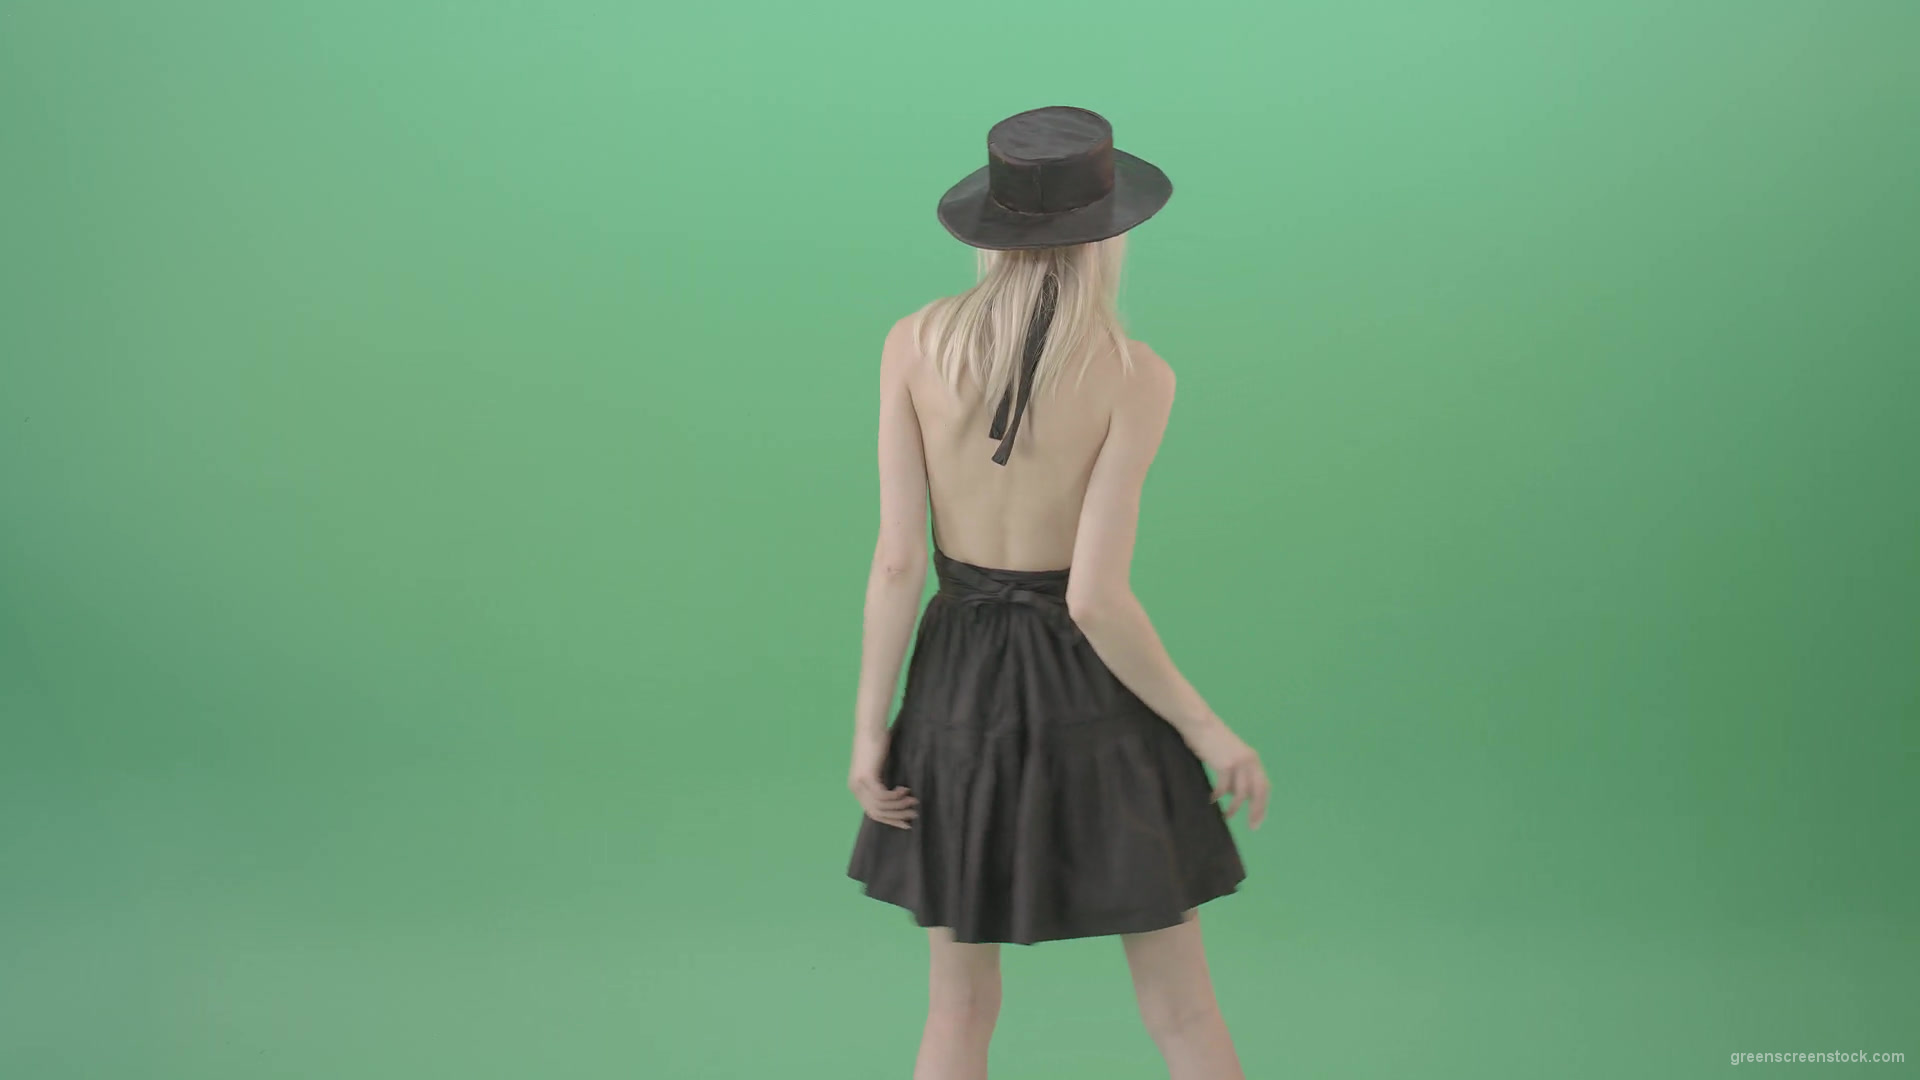 Blonde-girl-in-black-hat-with-open-back-posing-in-dark-dress-over-green-screen-4K-Video-Footage-1920_008 Green Screen Stock